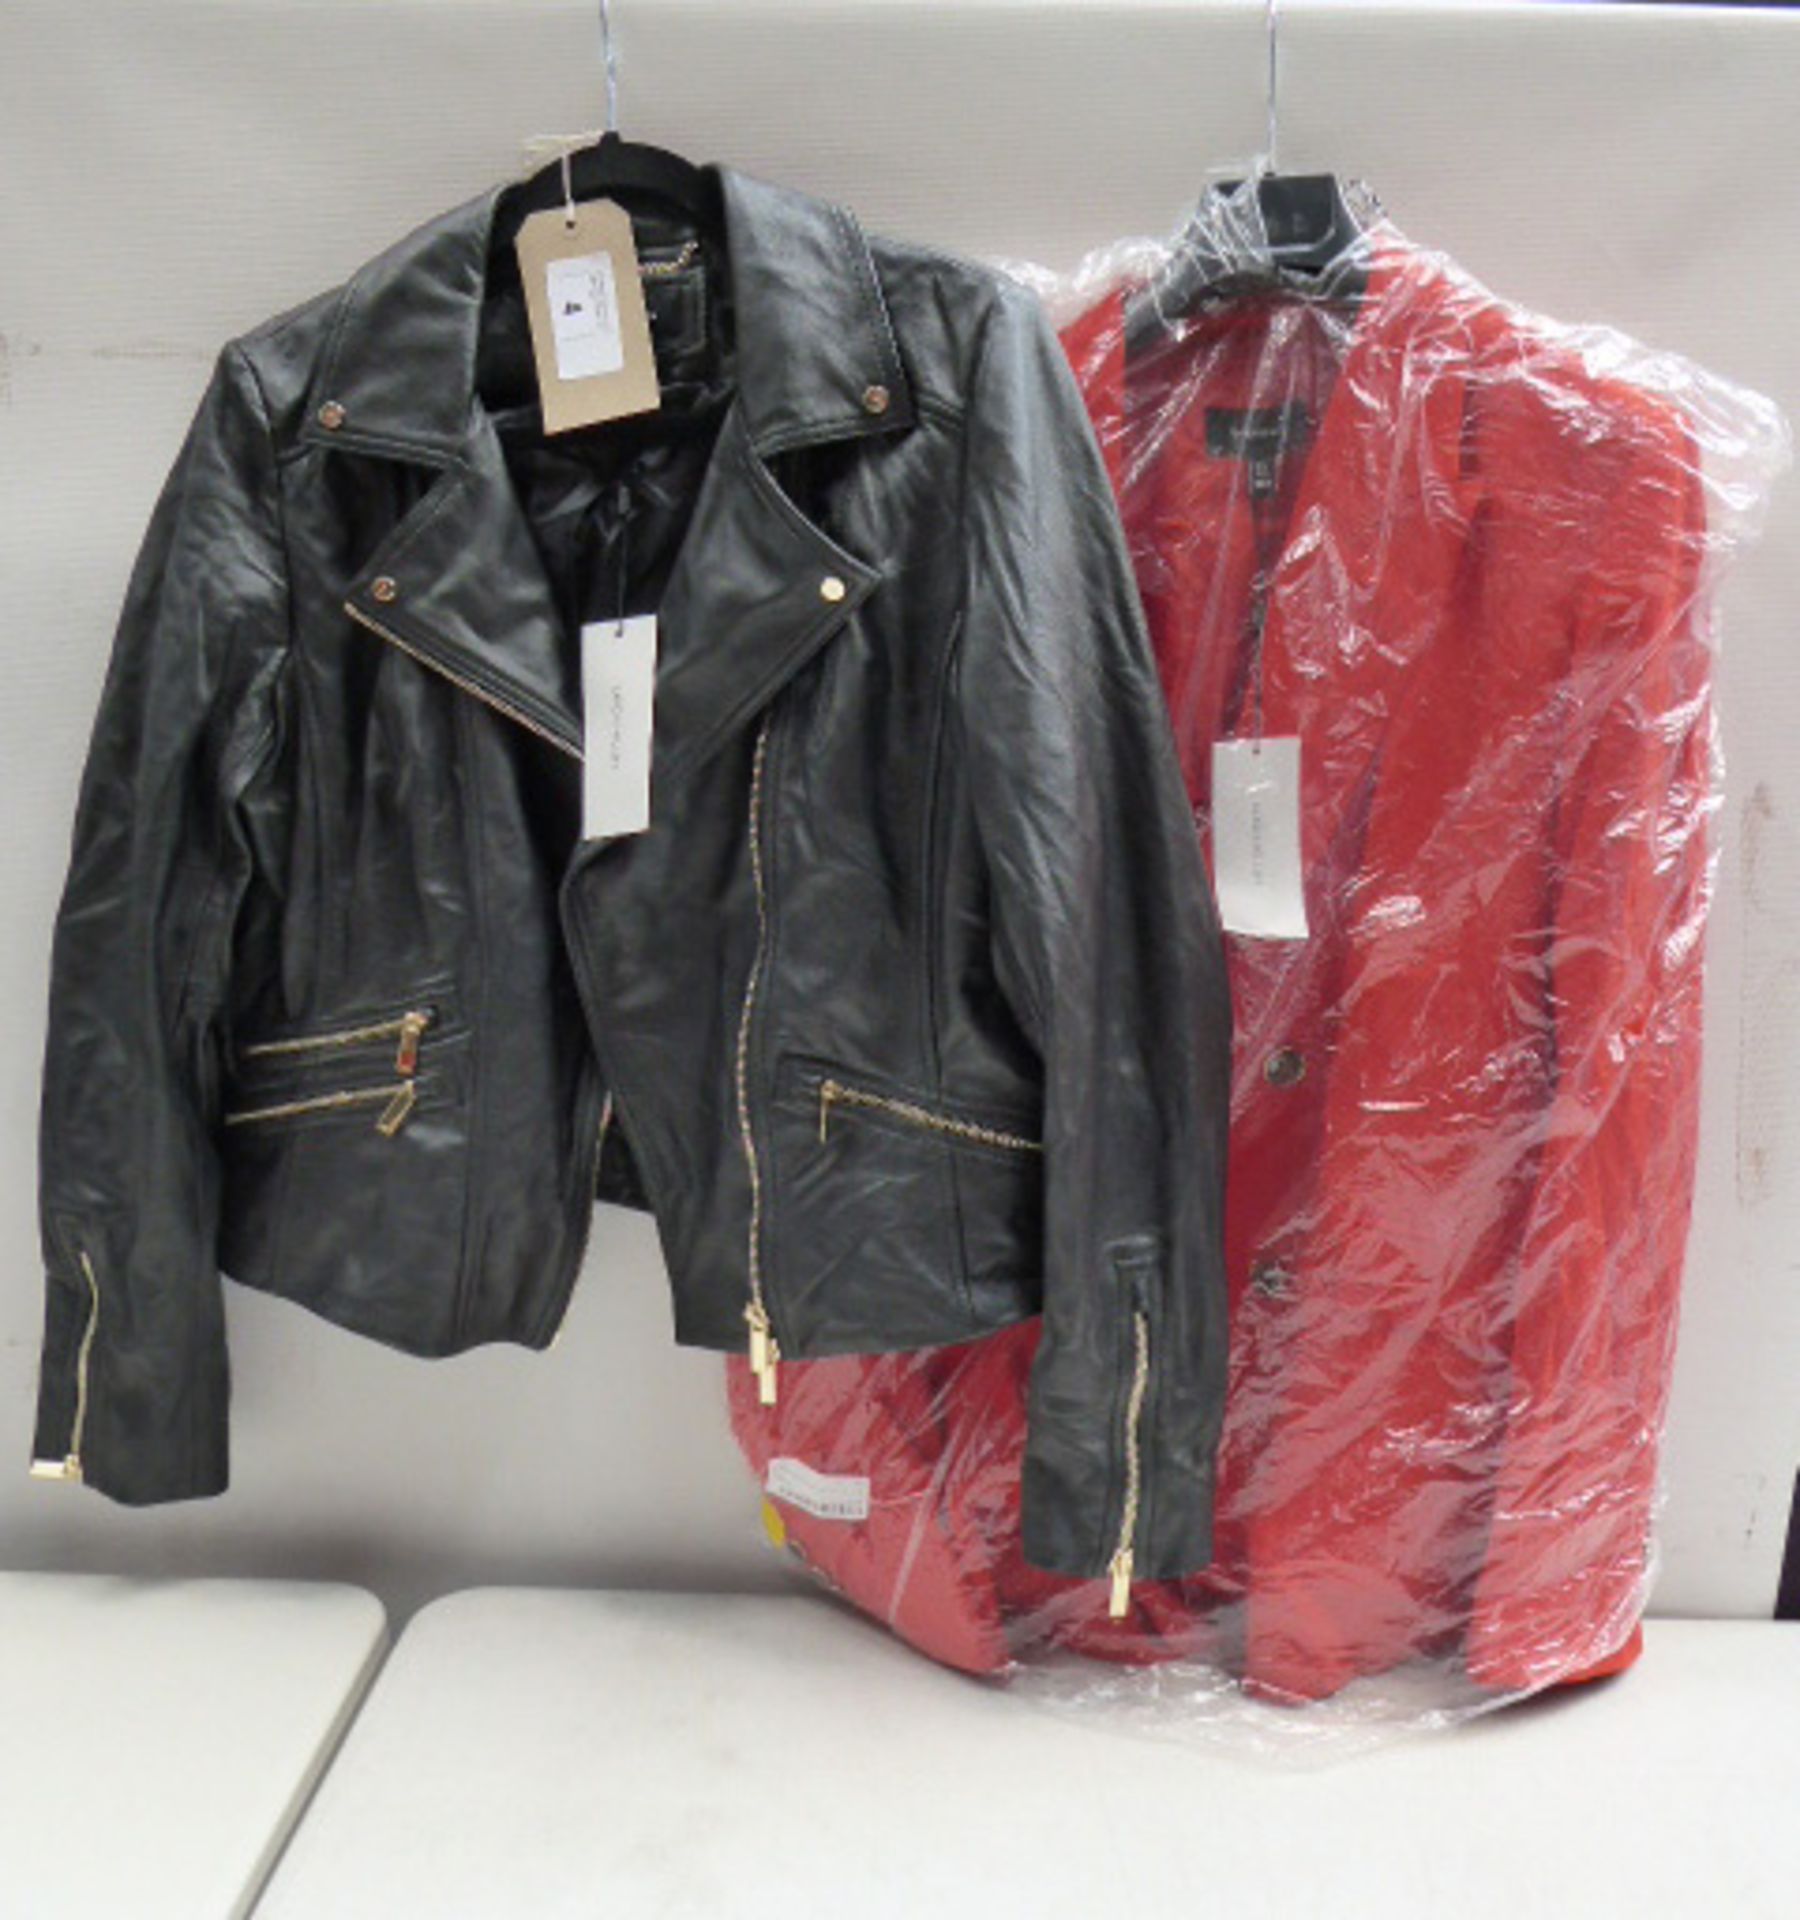 Karen Millen black leather biker jacket size 16 and Karen Millen orange jacket size 16